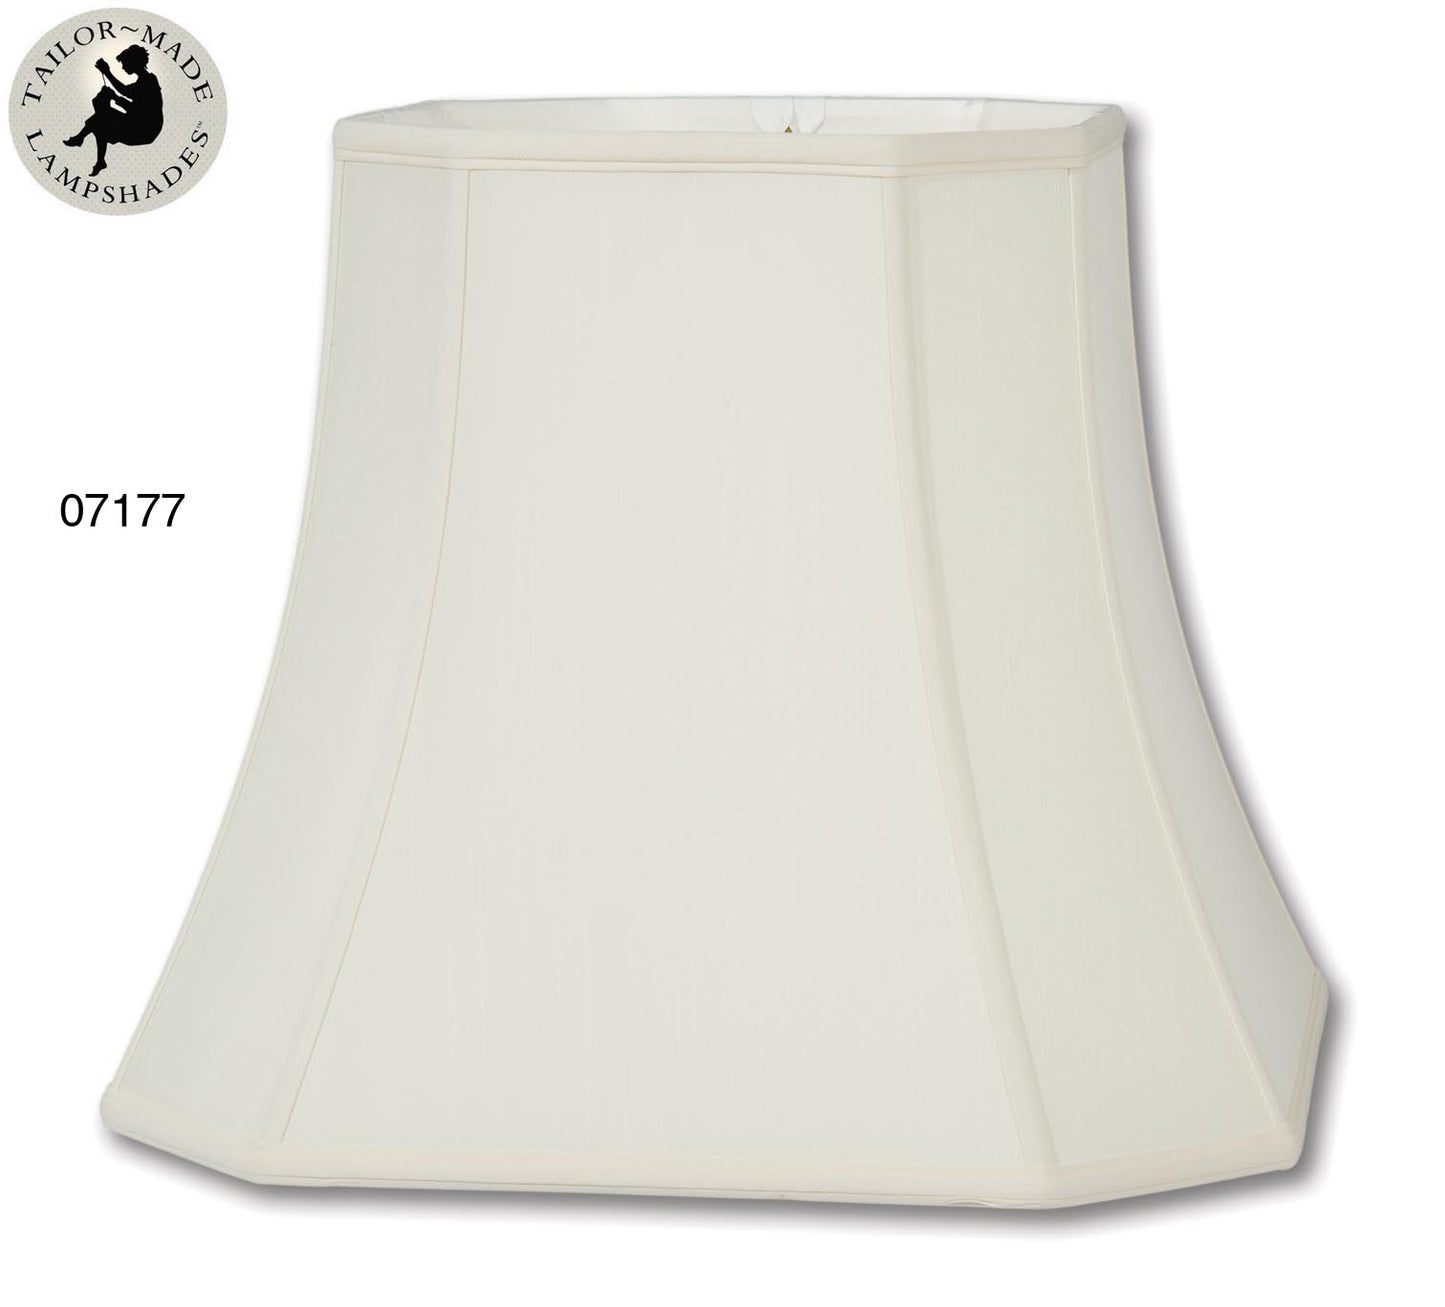 Cut Corner Square Lamp Shades - Eggshell Color, Tissue Shantung Material